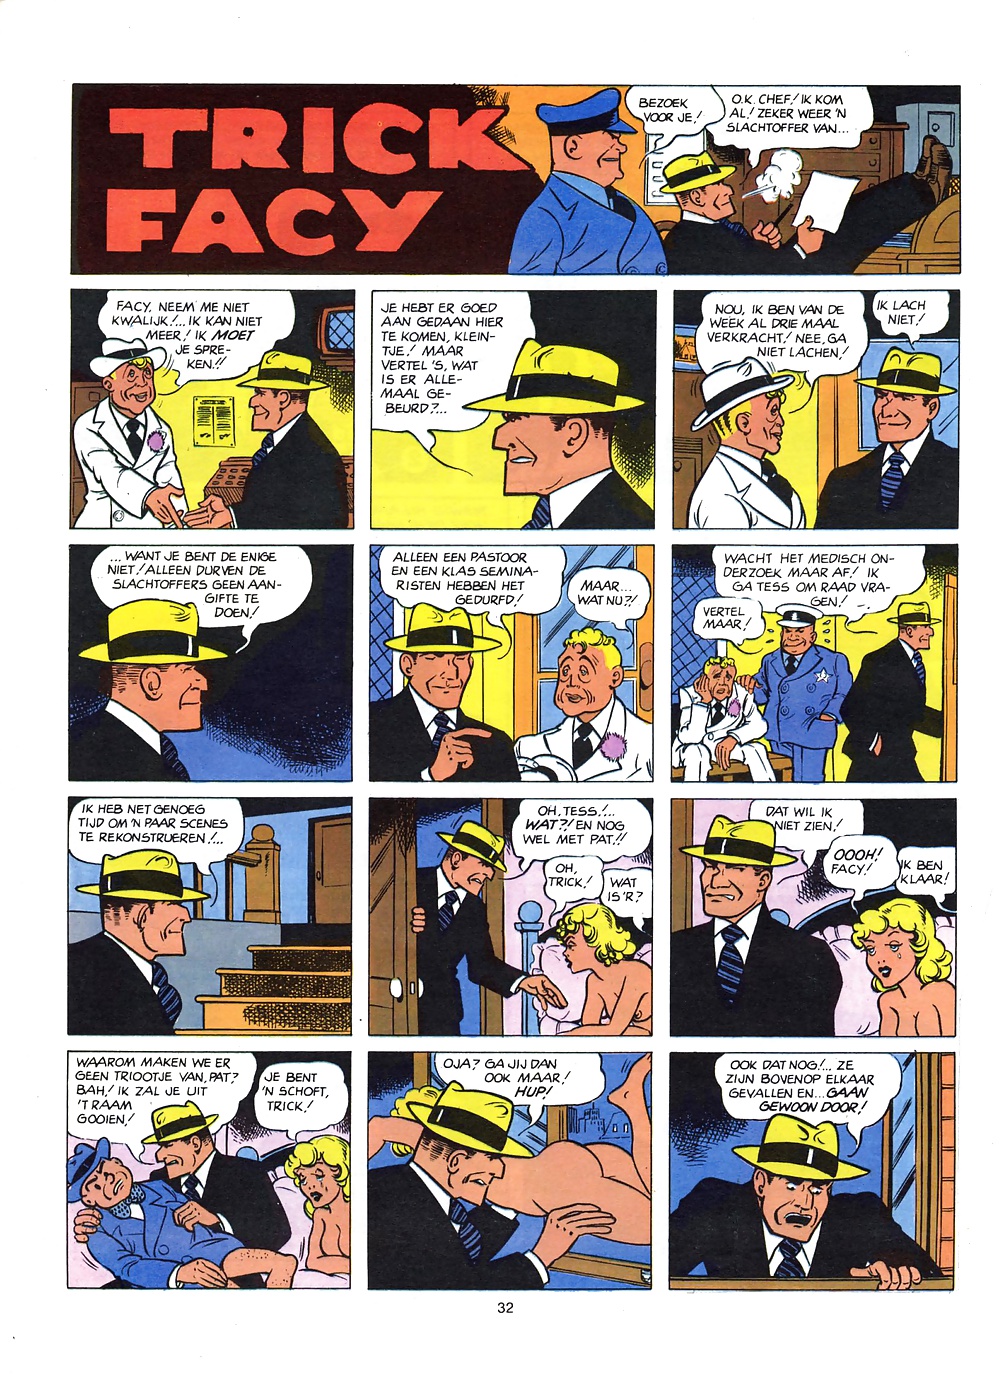 Vintage comic - Strip-Tease 2 #41027017